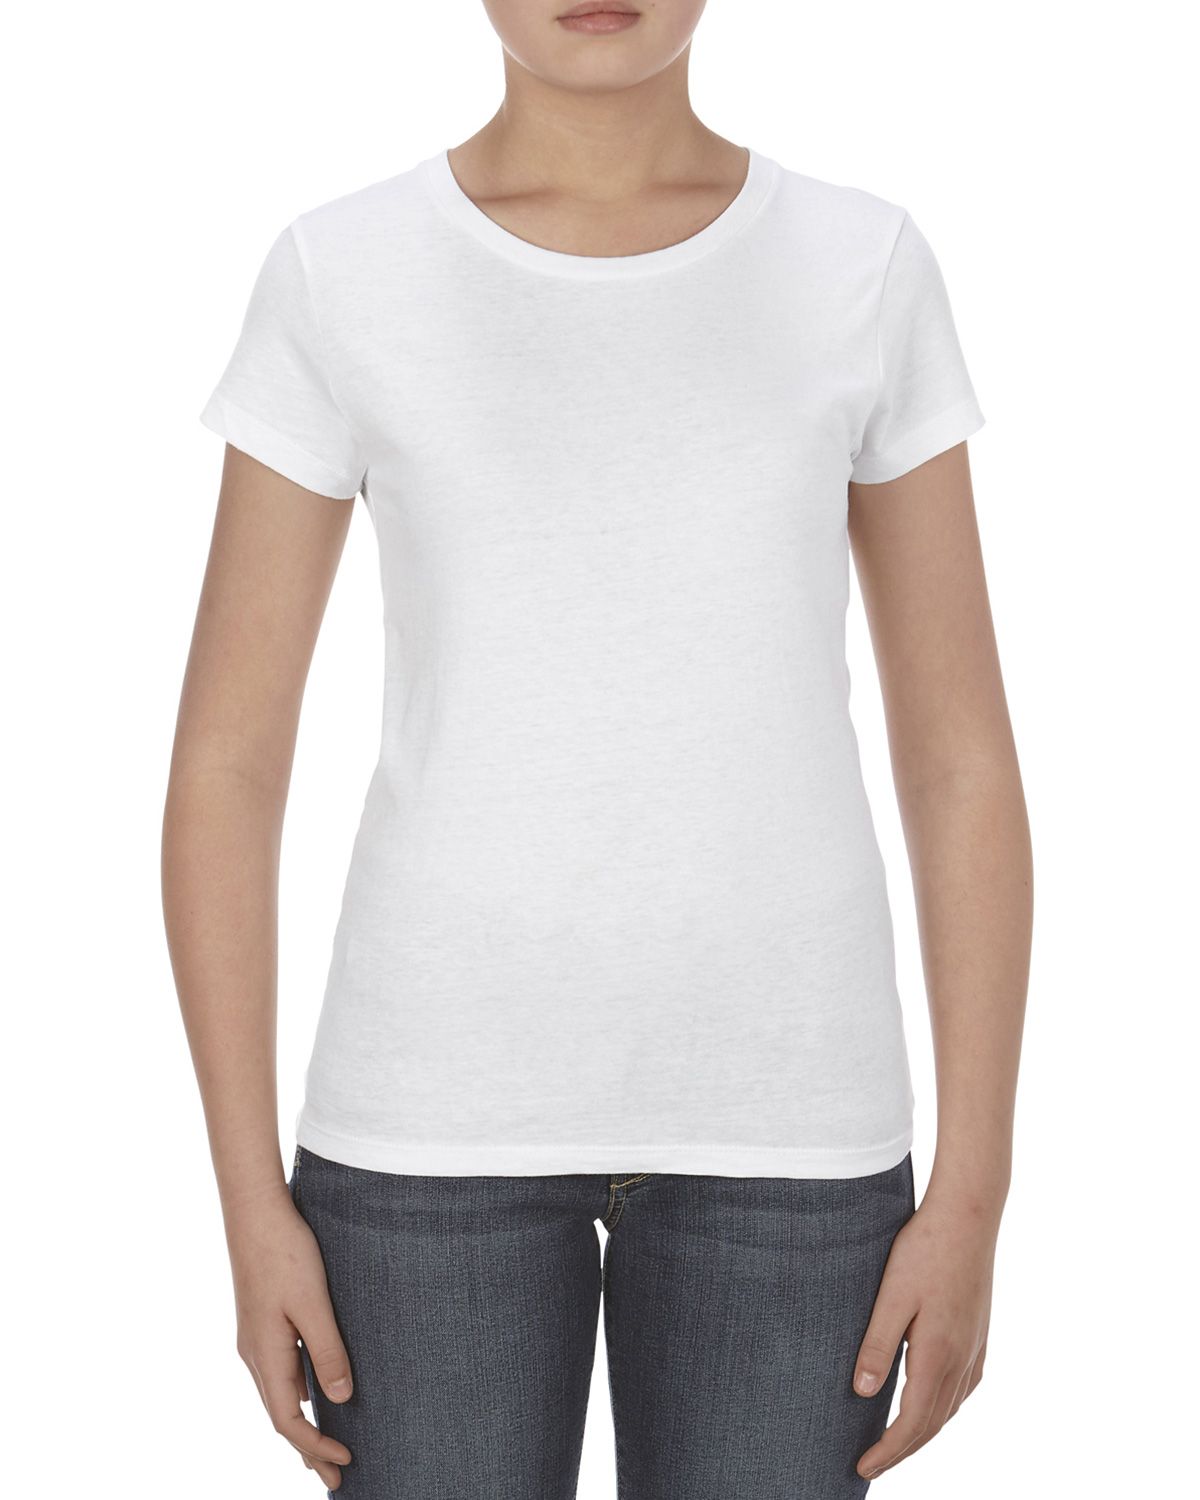 Alstyle AL2562 Women's Missy 4.3 oz.; Ringspun Cotton T-Shirt